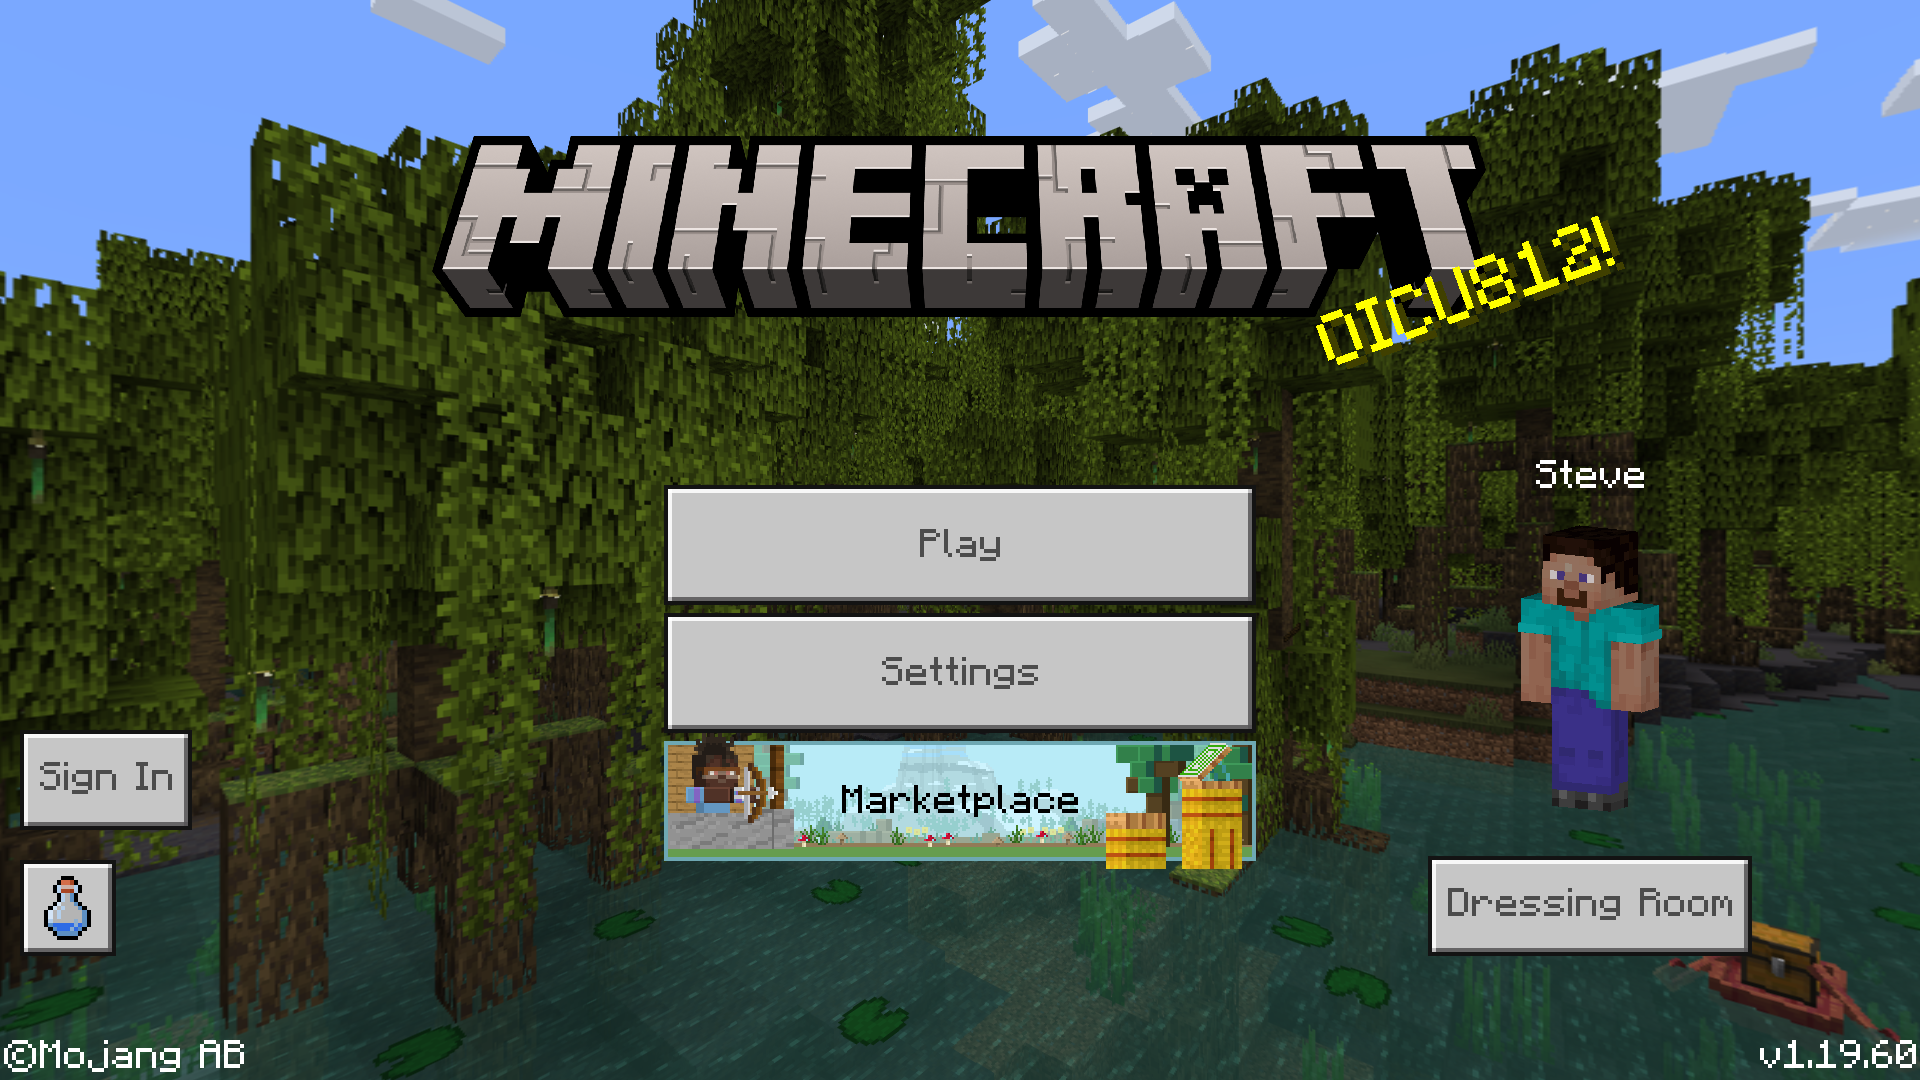 Download Minecraft PE 1.16.220 apk free: Nether Update